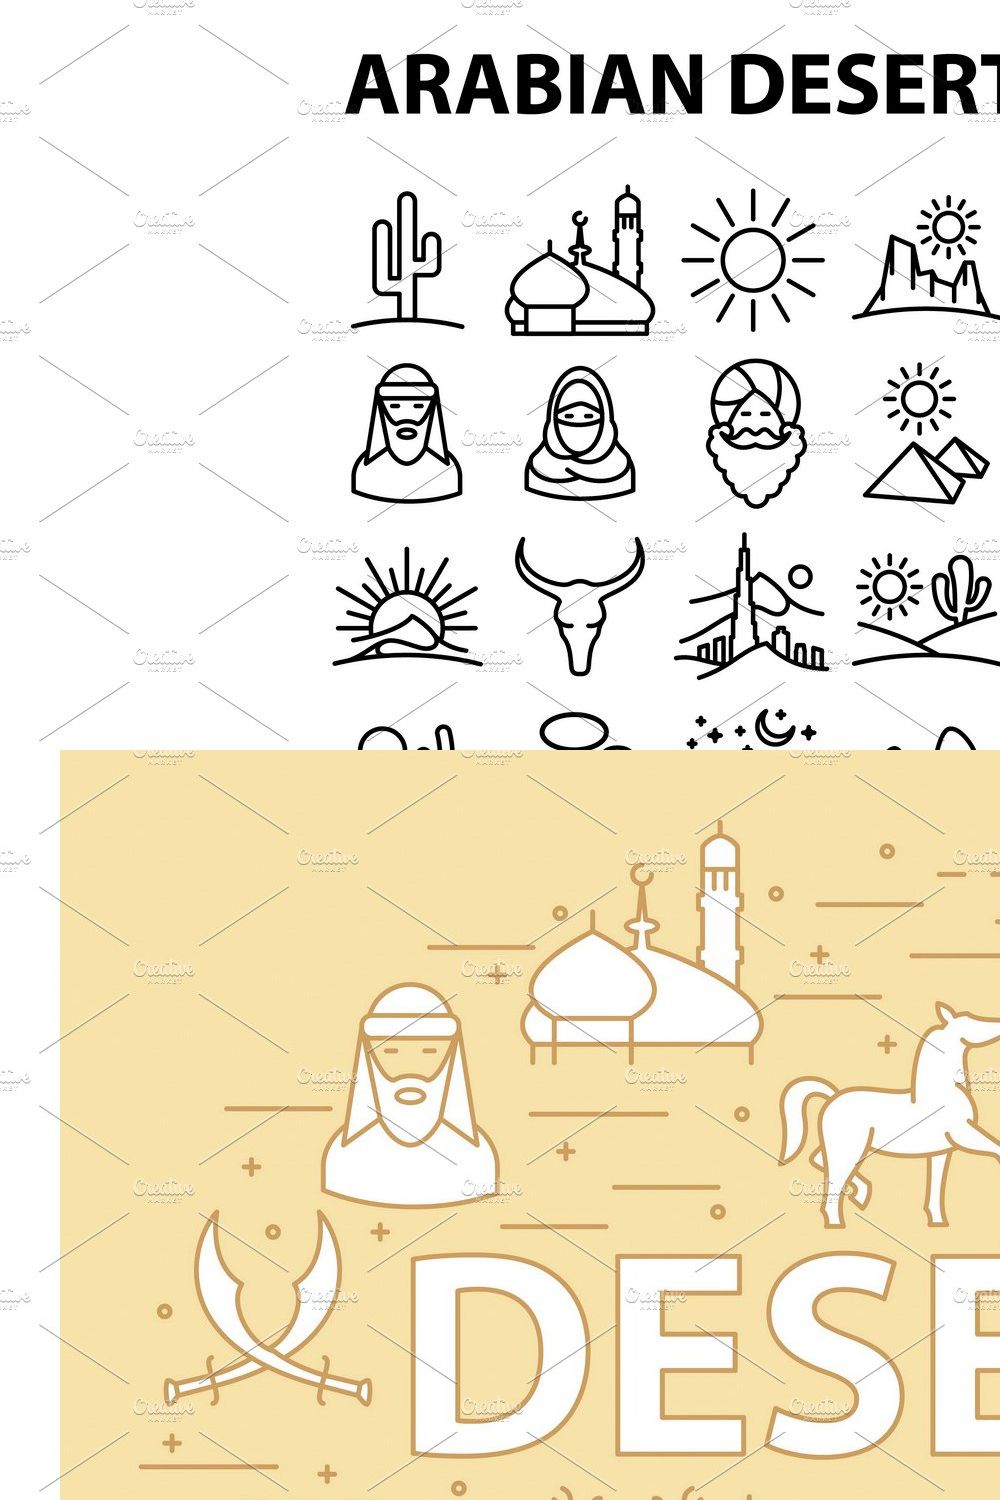 Arabian line icon set pinterest preview image.